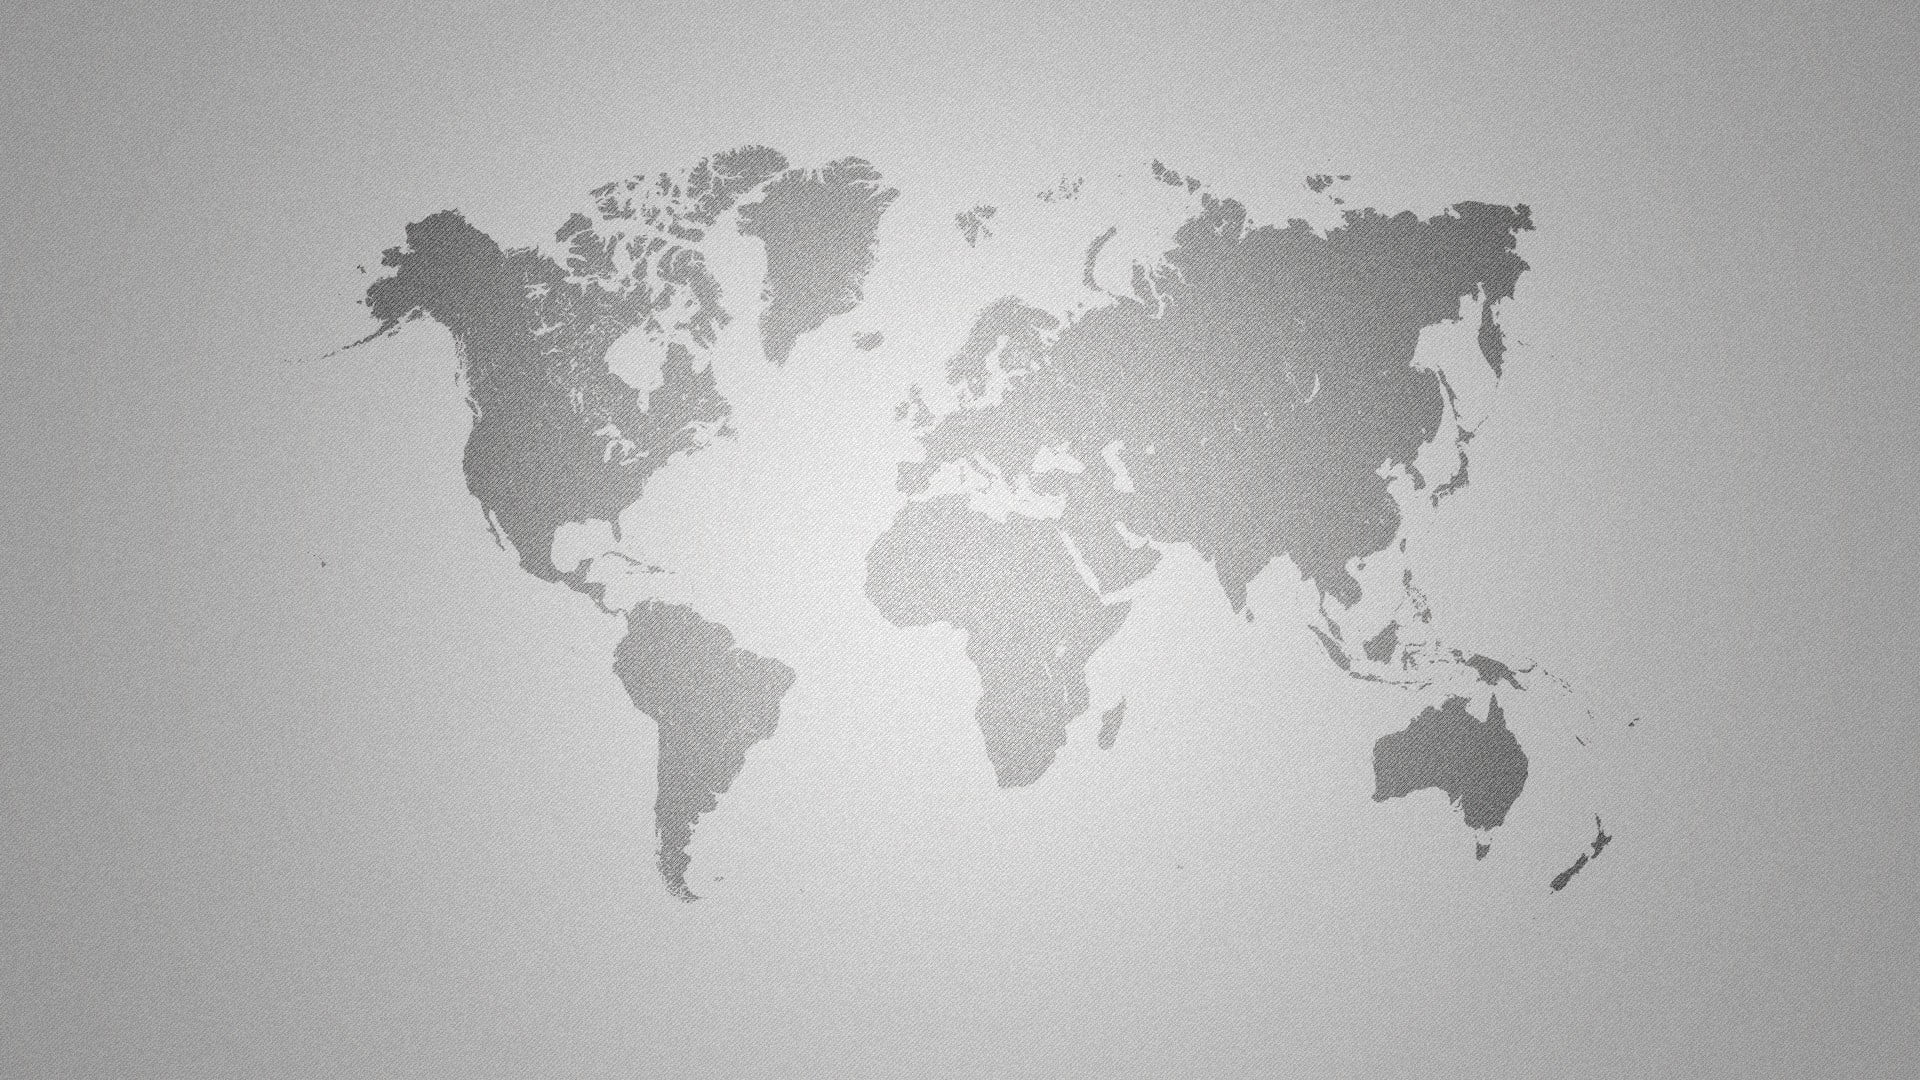 World Map Atlas Full HD Desktop Wallpapers - Wallpaper Cave